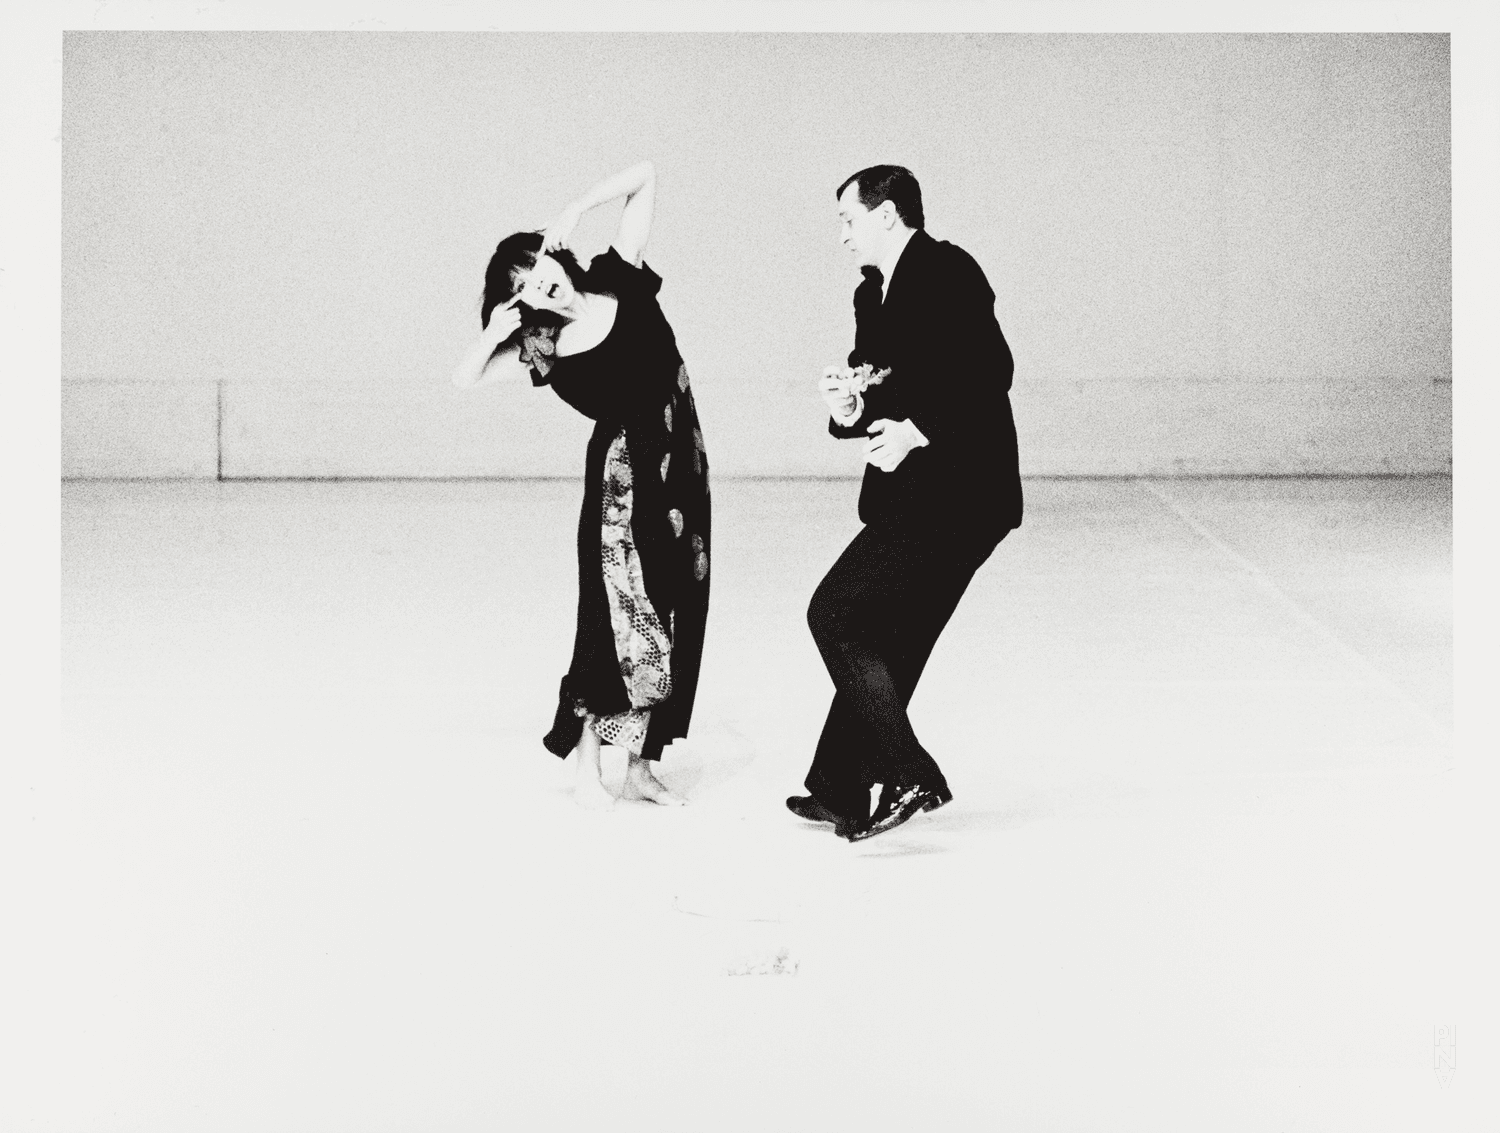 Jan Minařík and Mariko Aoyama in “Two Cigarettes in the Dark” by Pina Bausch